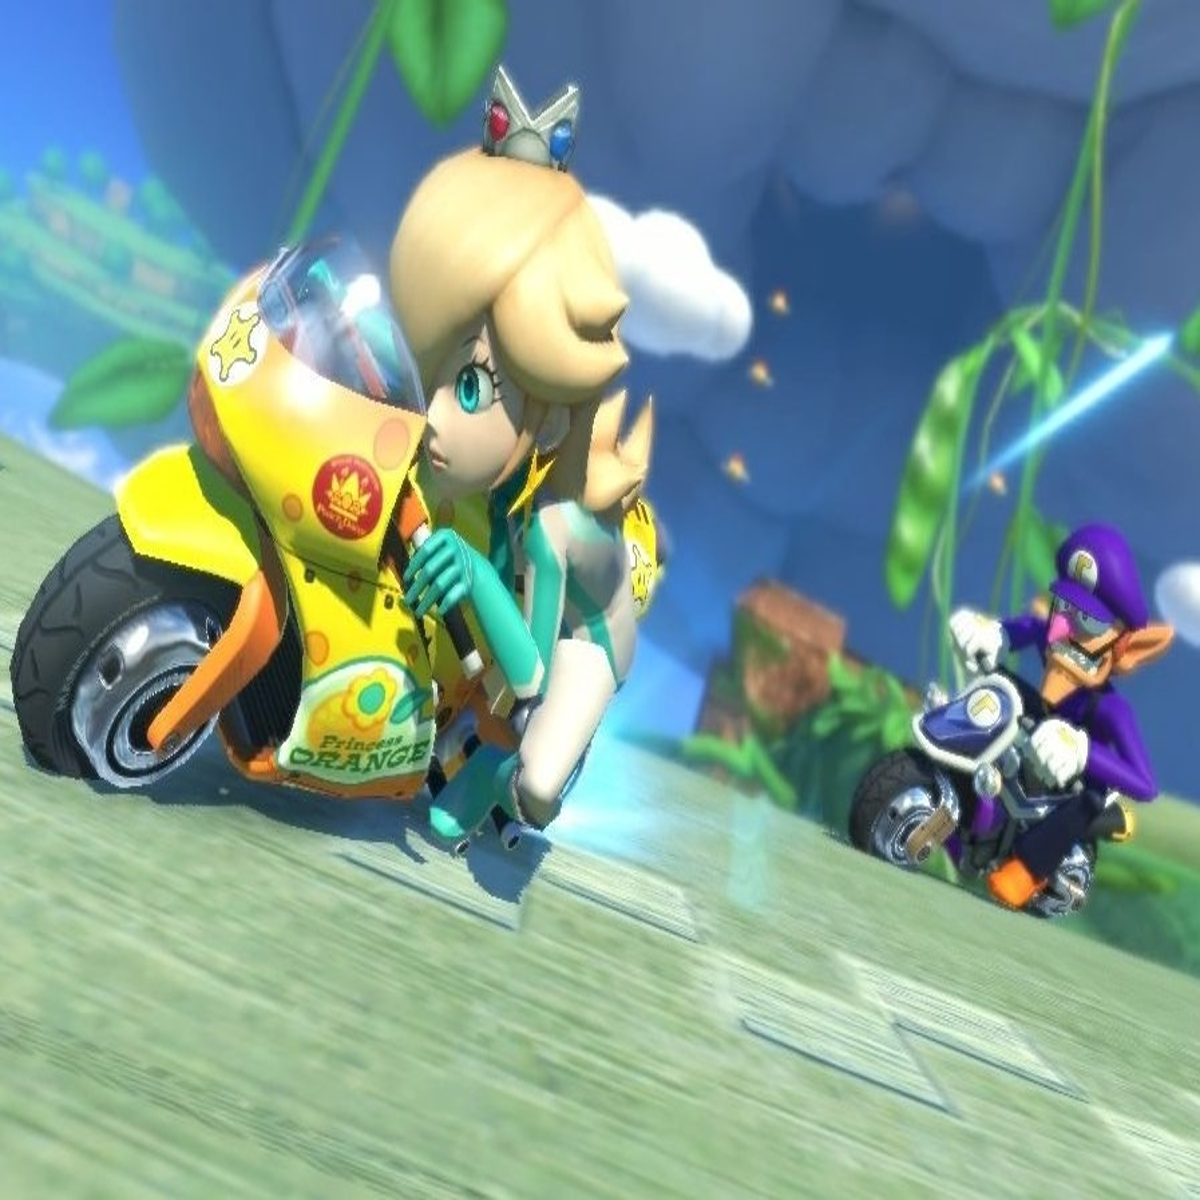 Wii U sales up 4x following Mario Kart 8